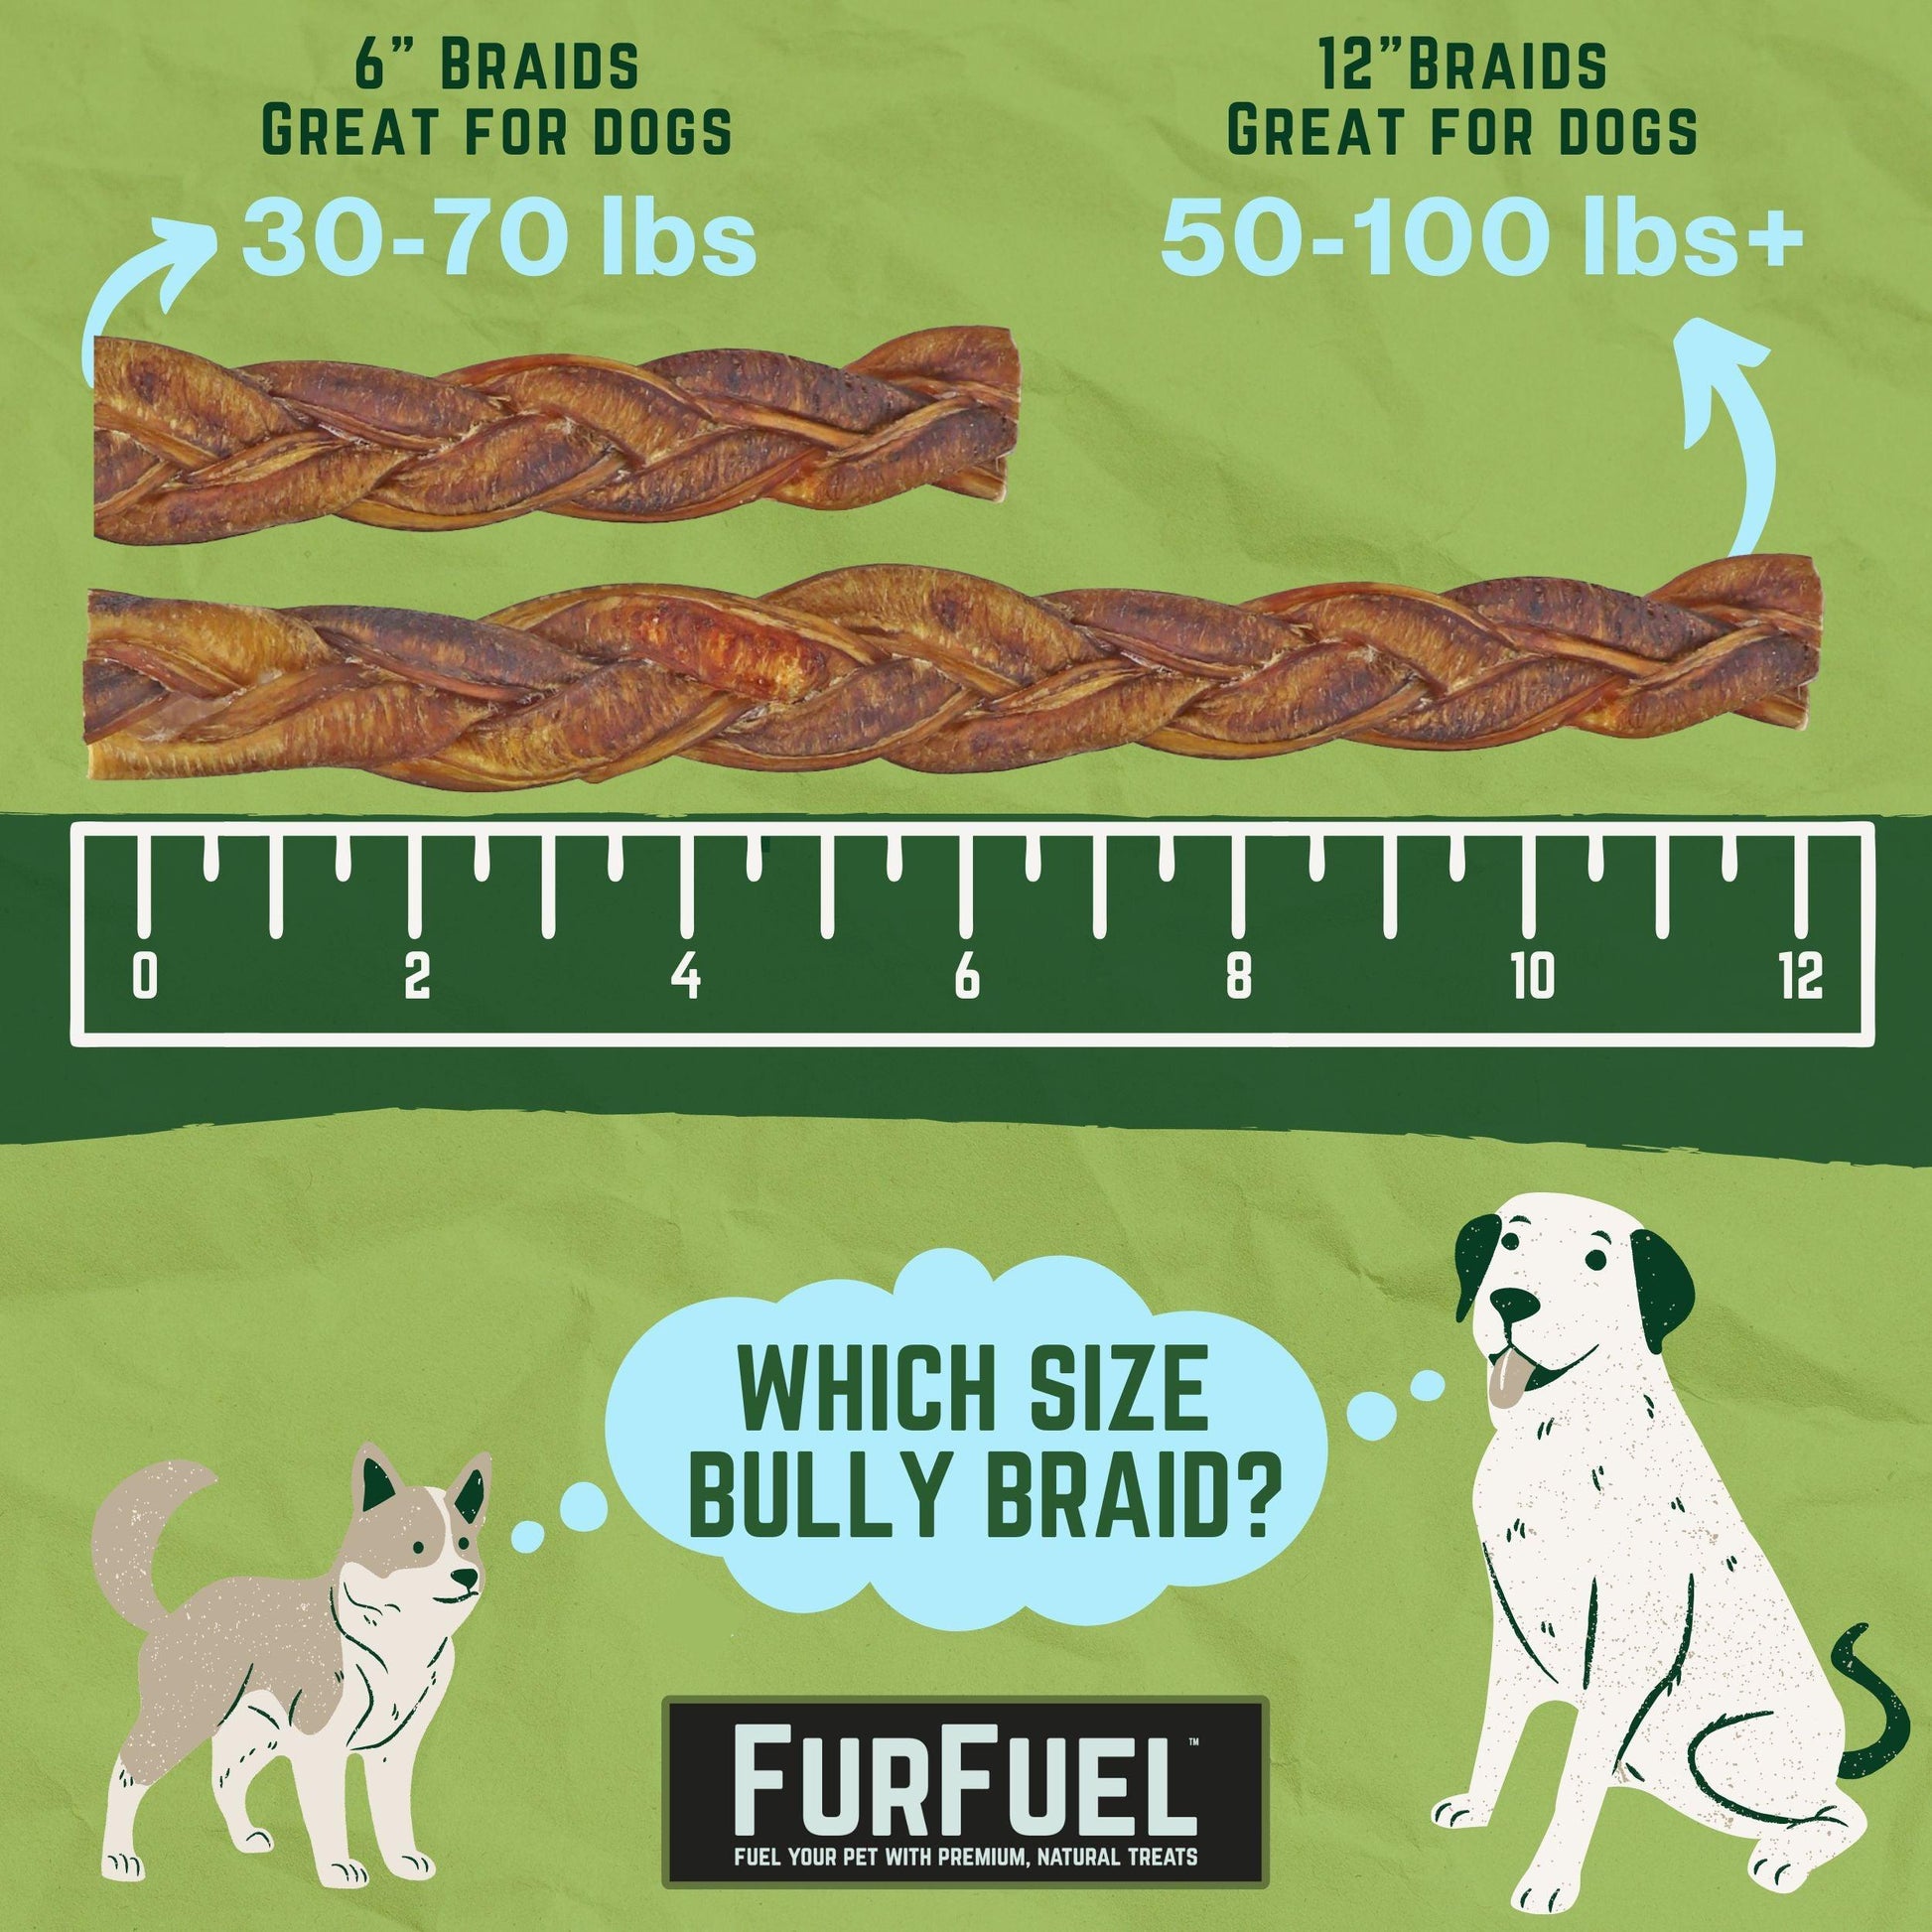 FurFuel Braided Bully Sticks, 12" Large Braids for Dogs 50-100+ lbs. - FurFuel